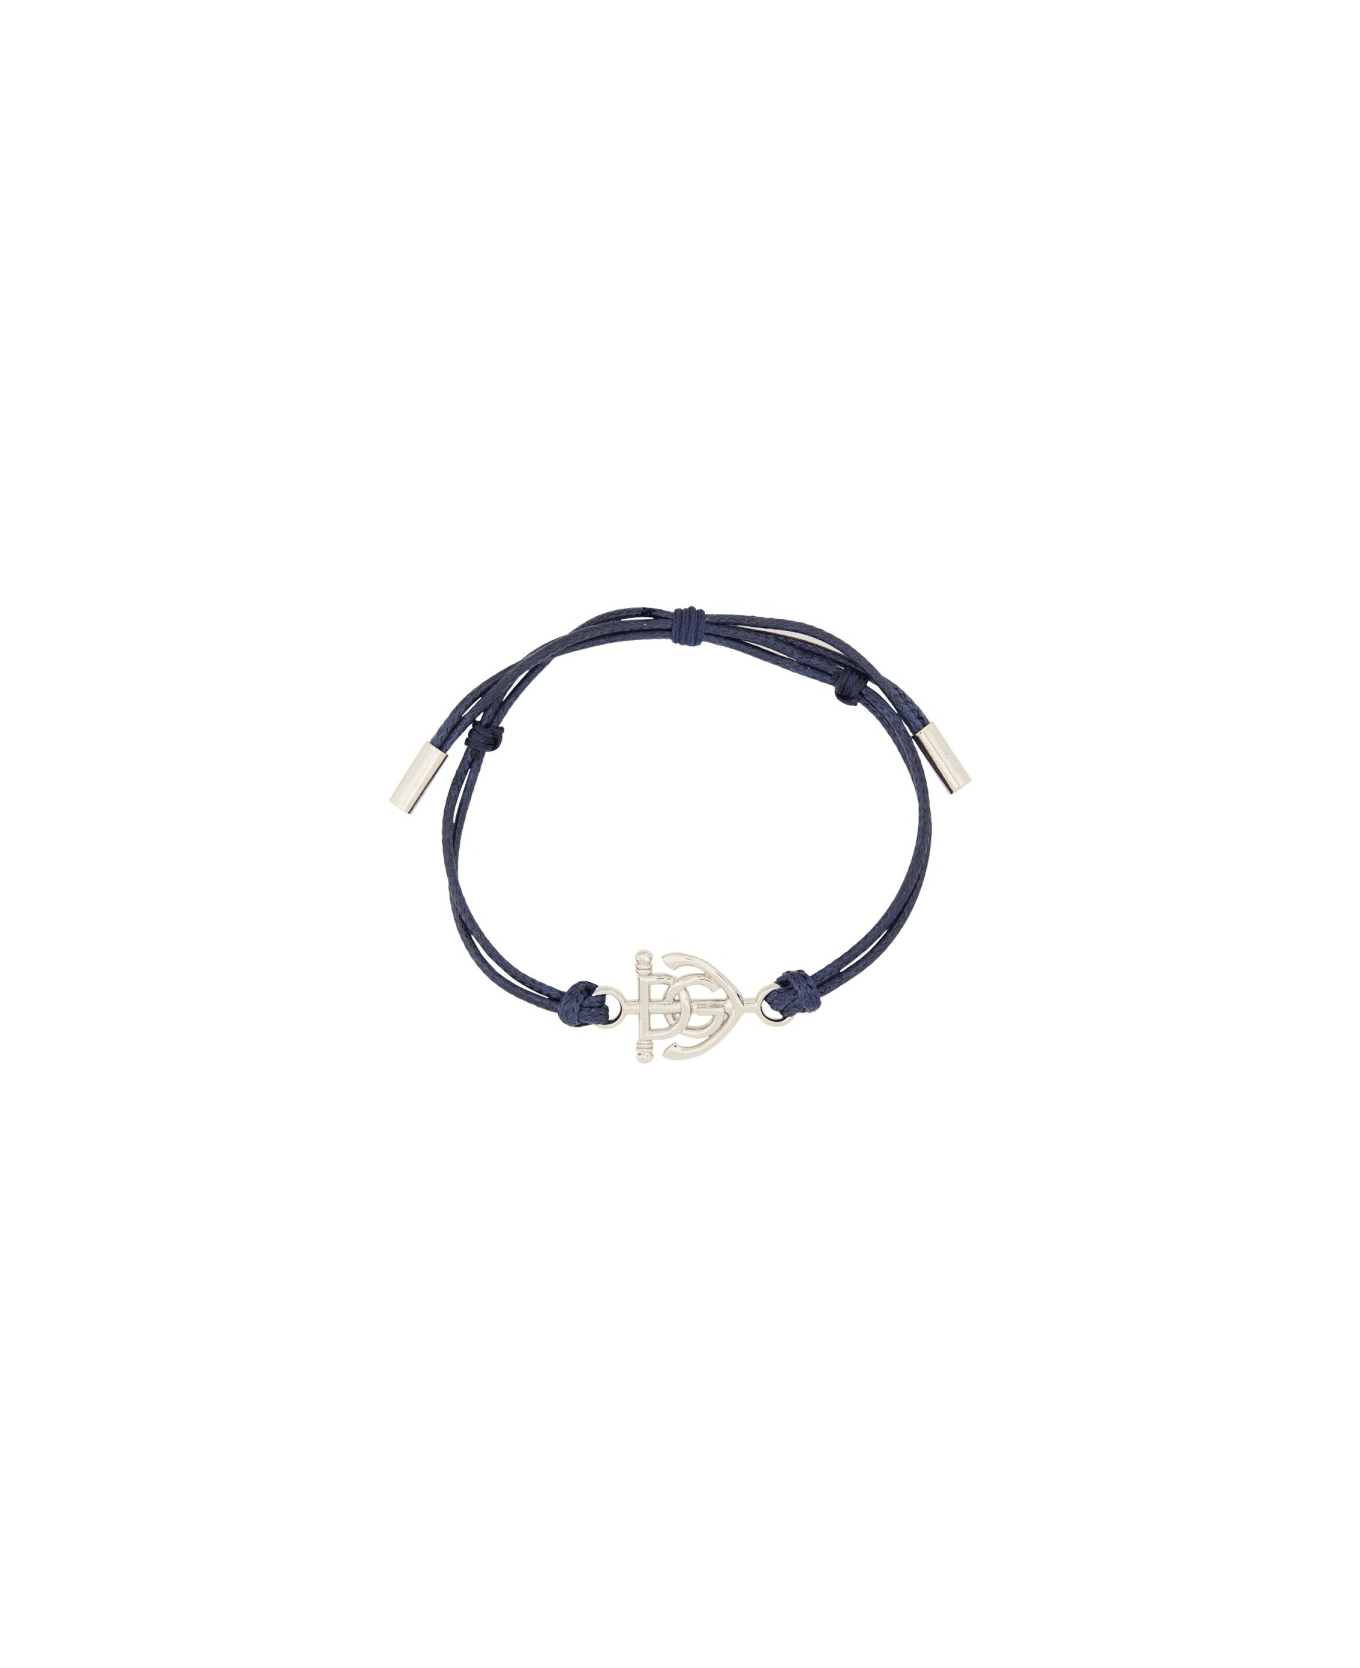 Dolce & Gabbana "navy" Lanyard Bracelet - BLUE